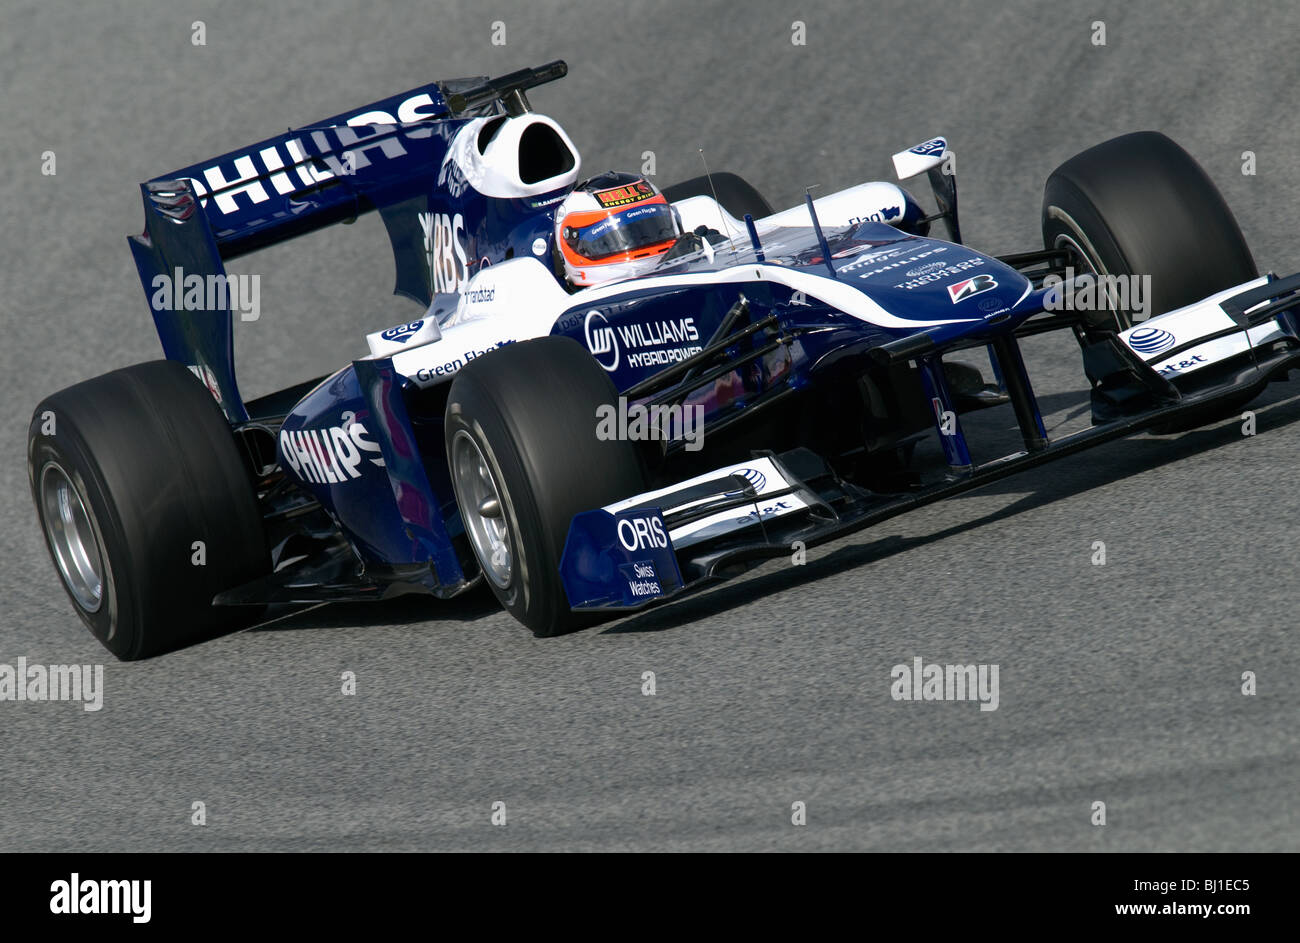 Rubens Barrichello (BRA) in the Williams FW31 racecar during Formula 1  testing sessions at Circuit de Catalunya Stock Photo - Alamy